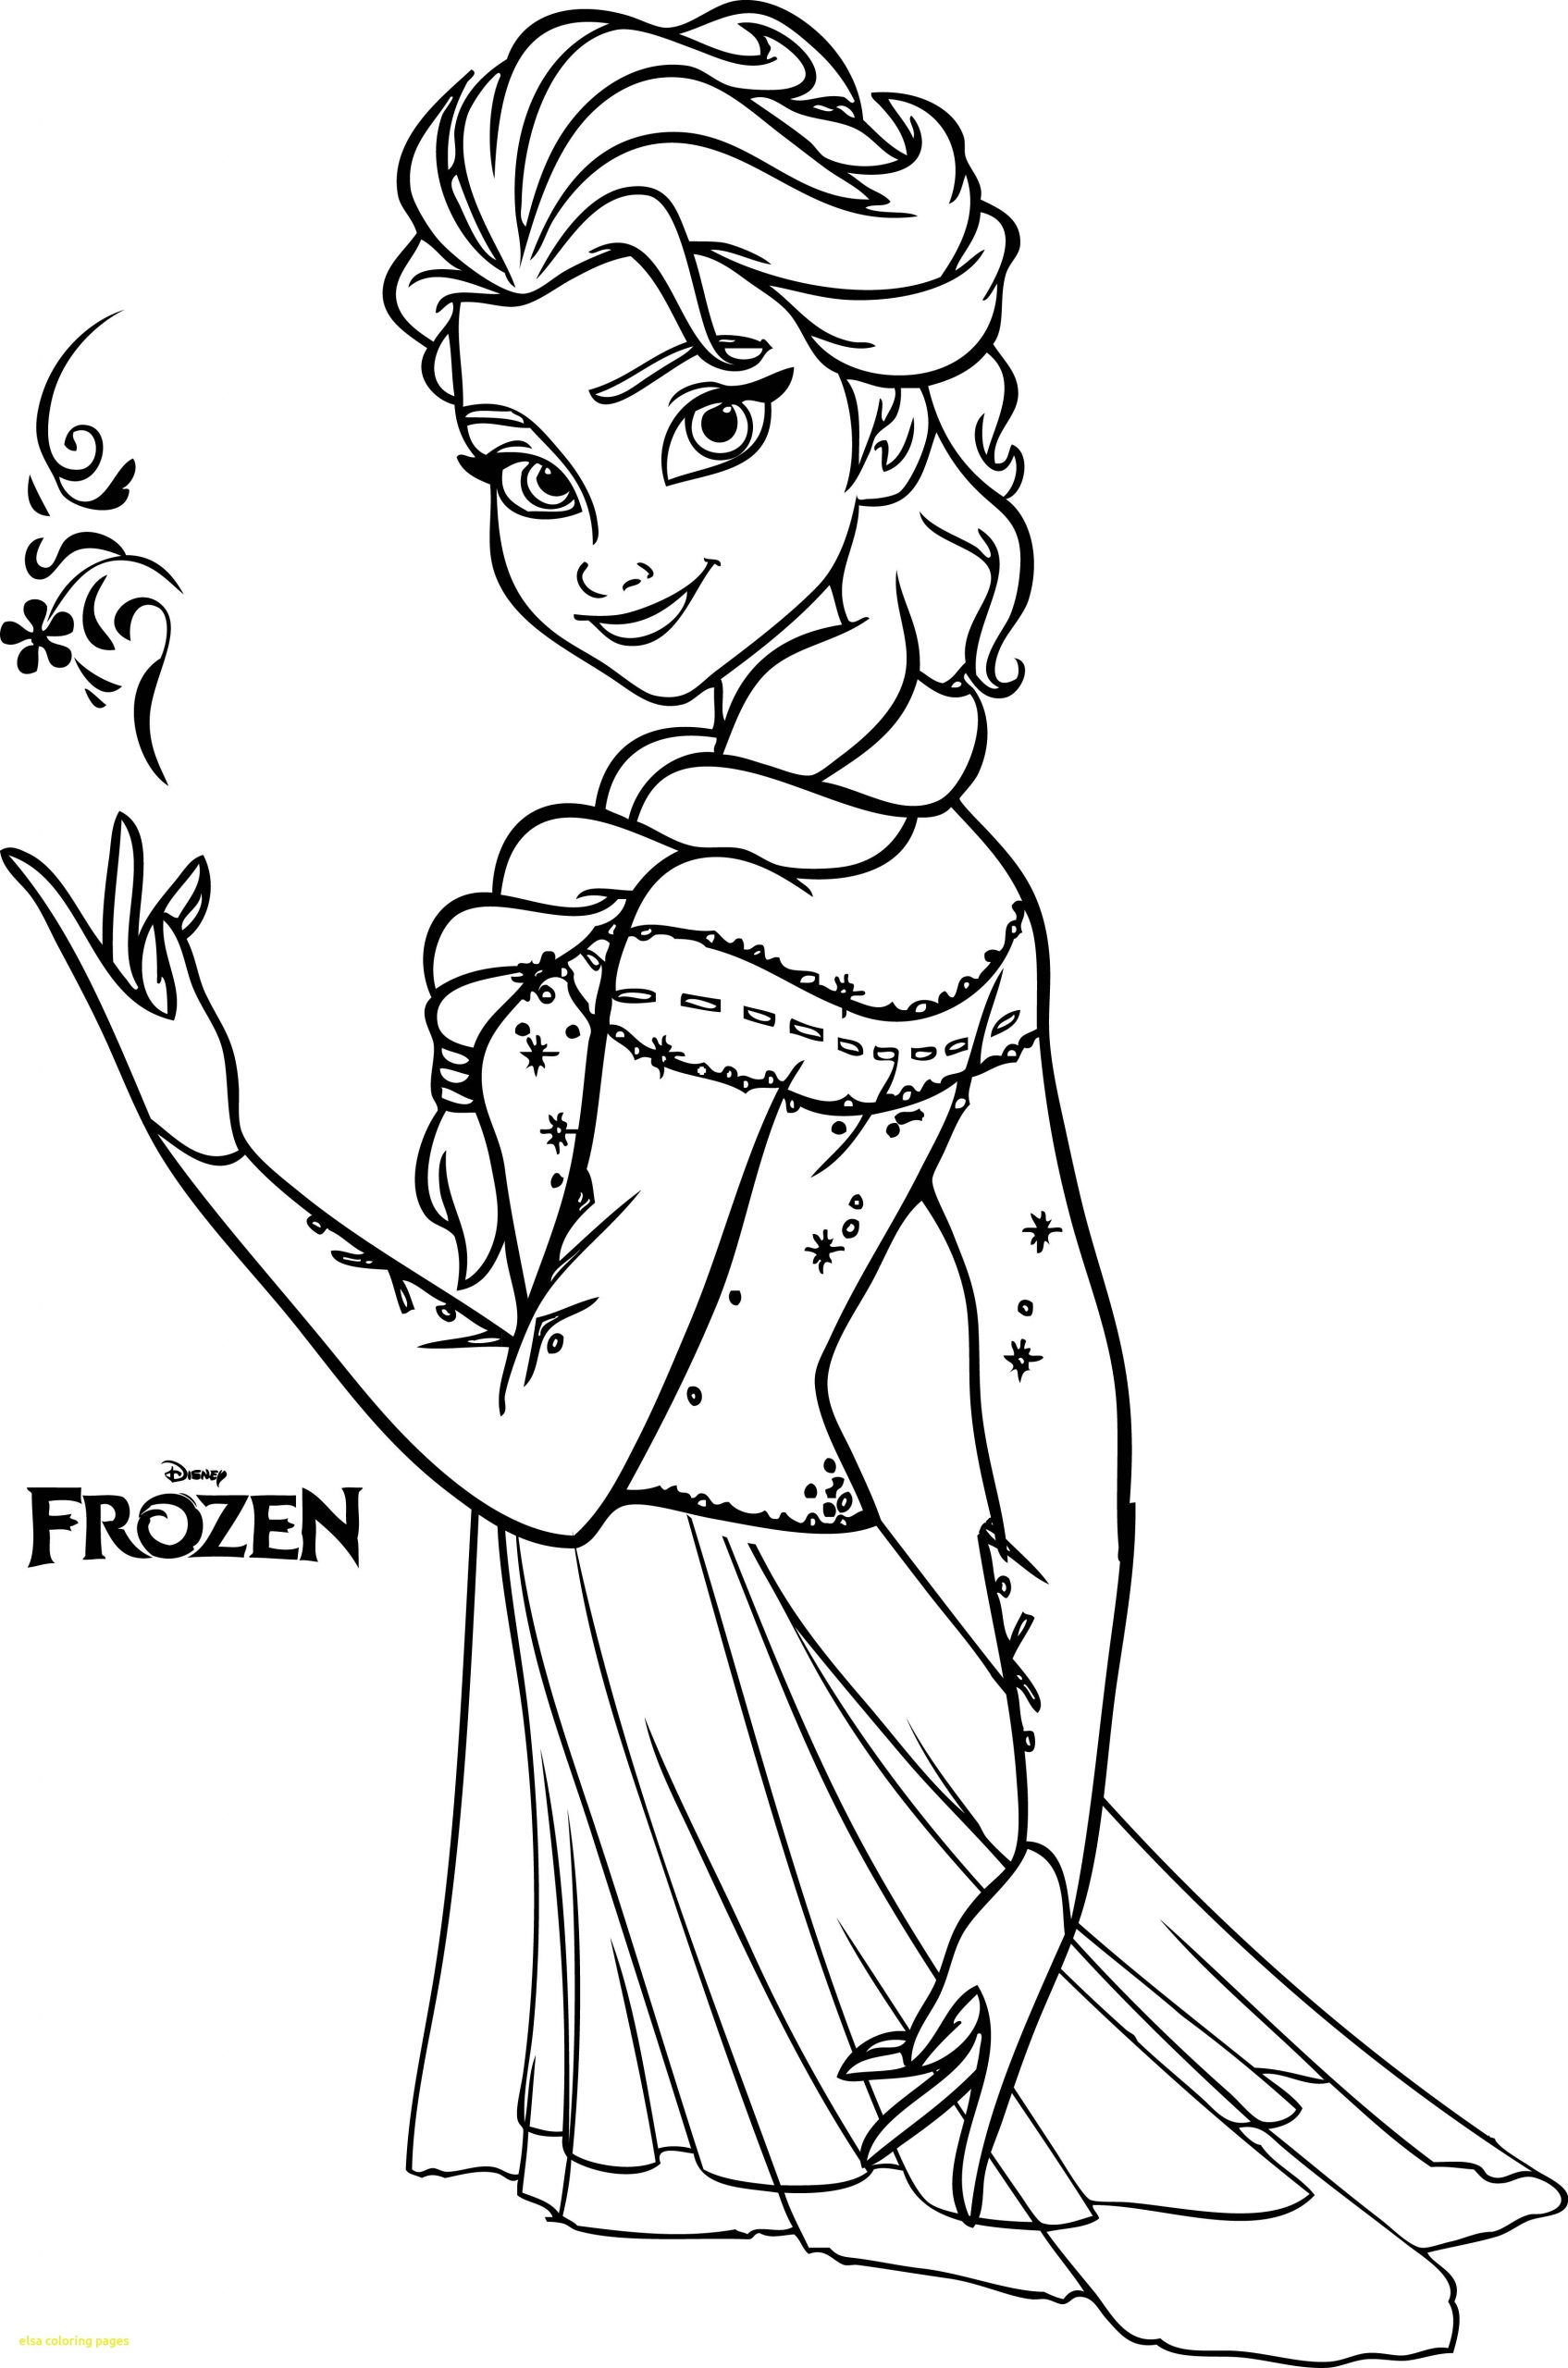 Disney Princess Coloring Pages Frozen Elsa At Getdrawings tout Coloriage Elsa,